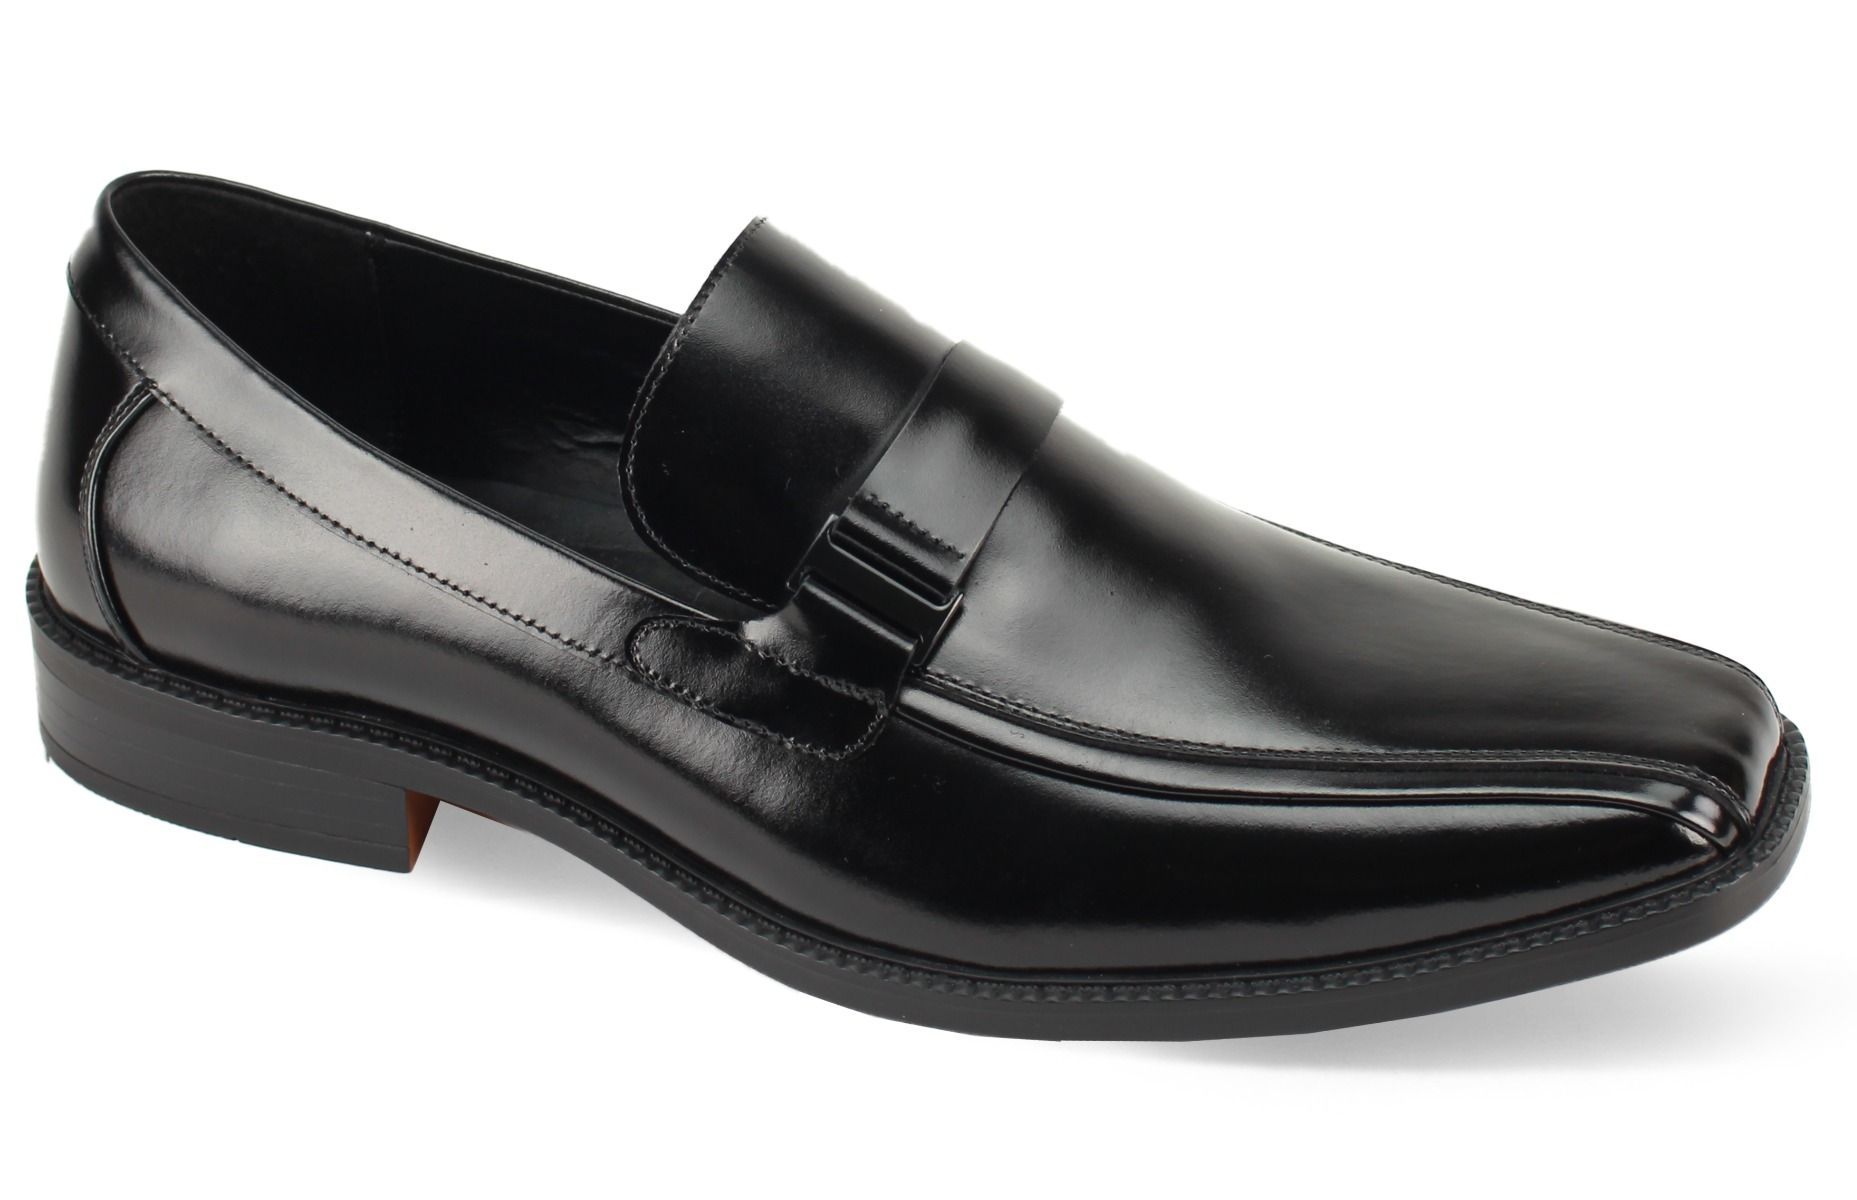 Giorgio Venturi Men's Outlet Slip On Dress Shoe - Smooth Classic